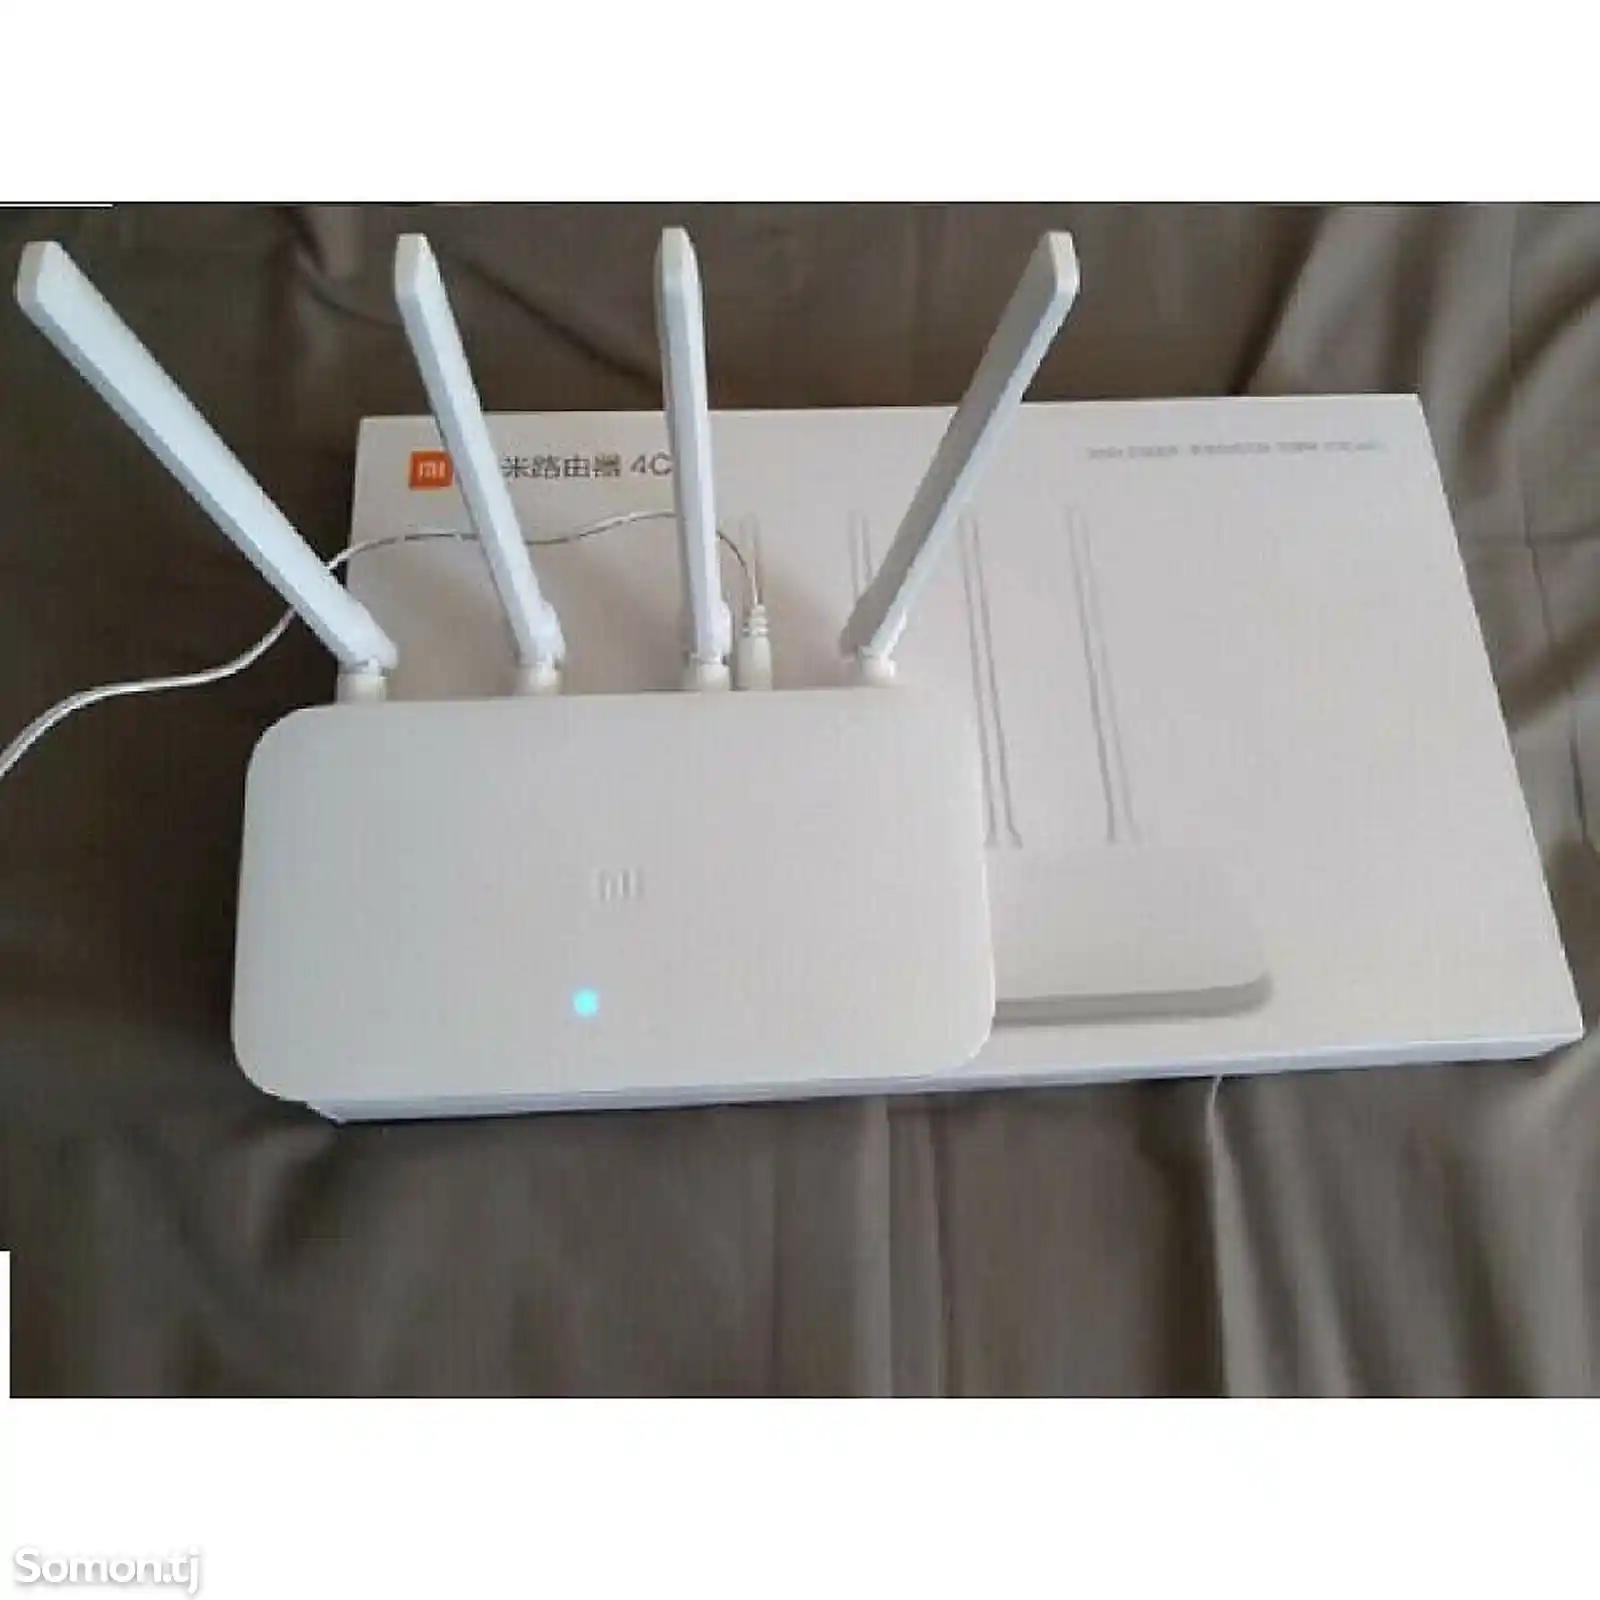 Wi-Fi роутер Xiaomi Mi Wi-Fi Router 4C-2